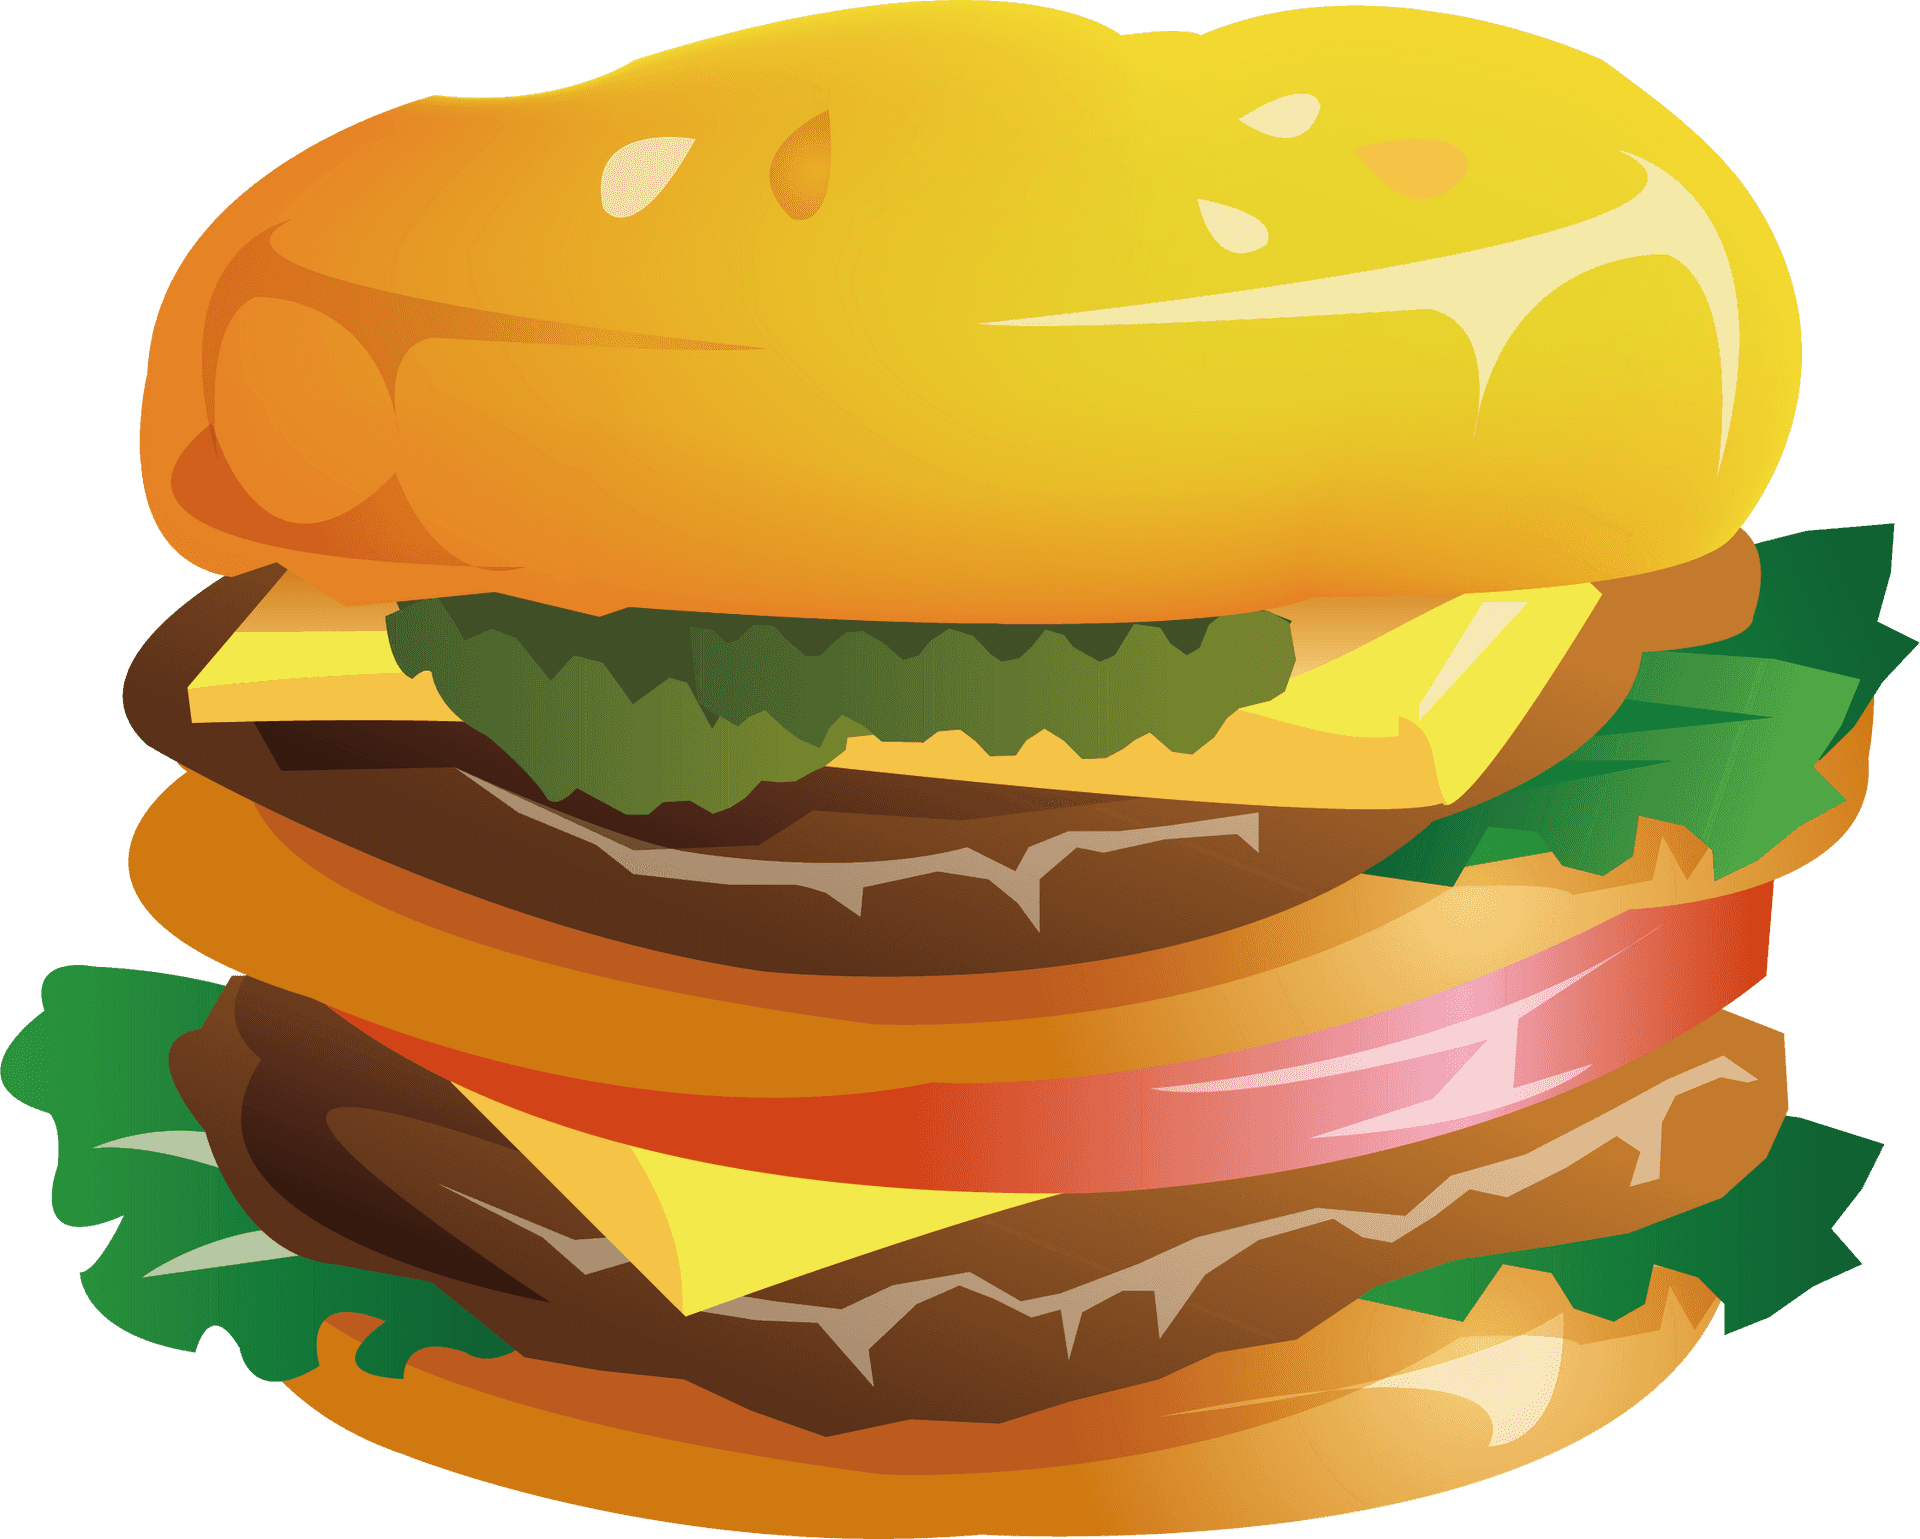 Iconic Big Mac Burger Illustration PNG